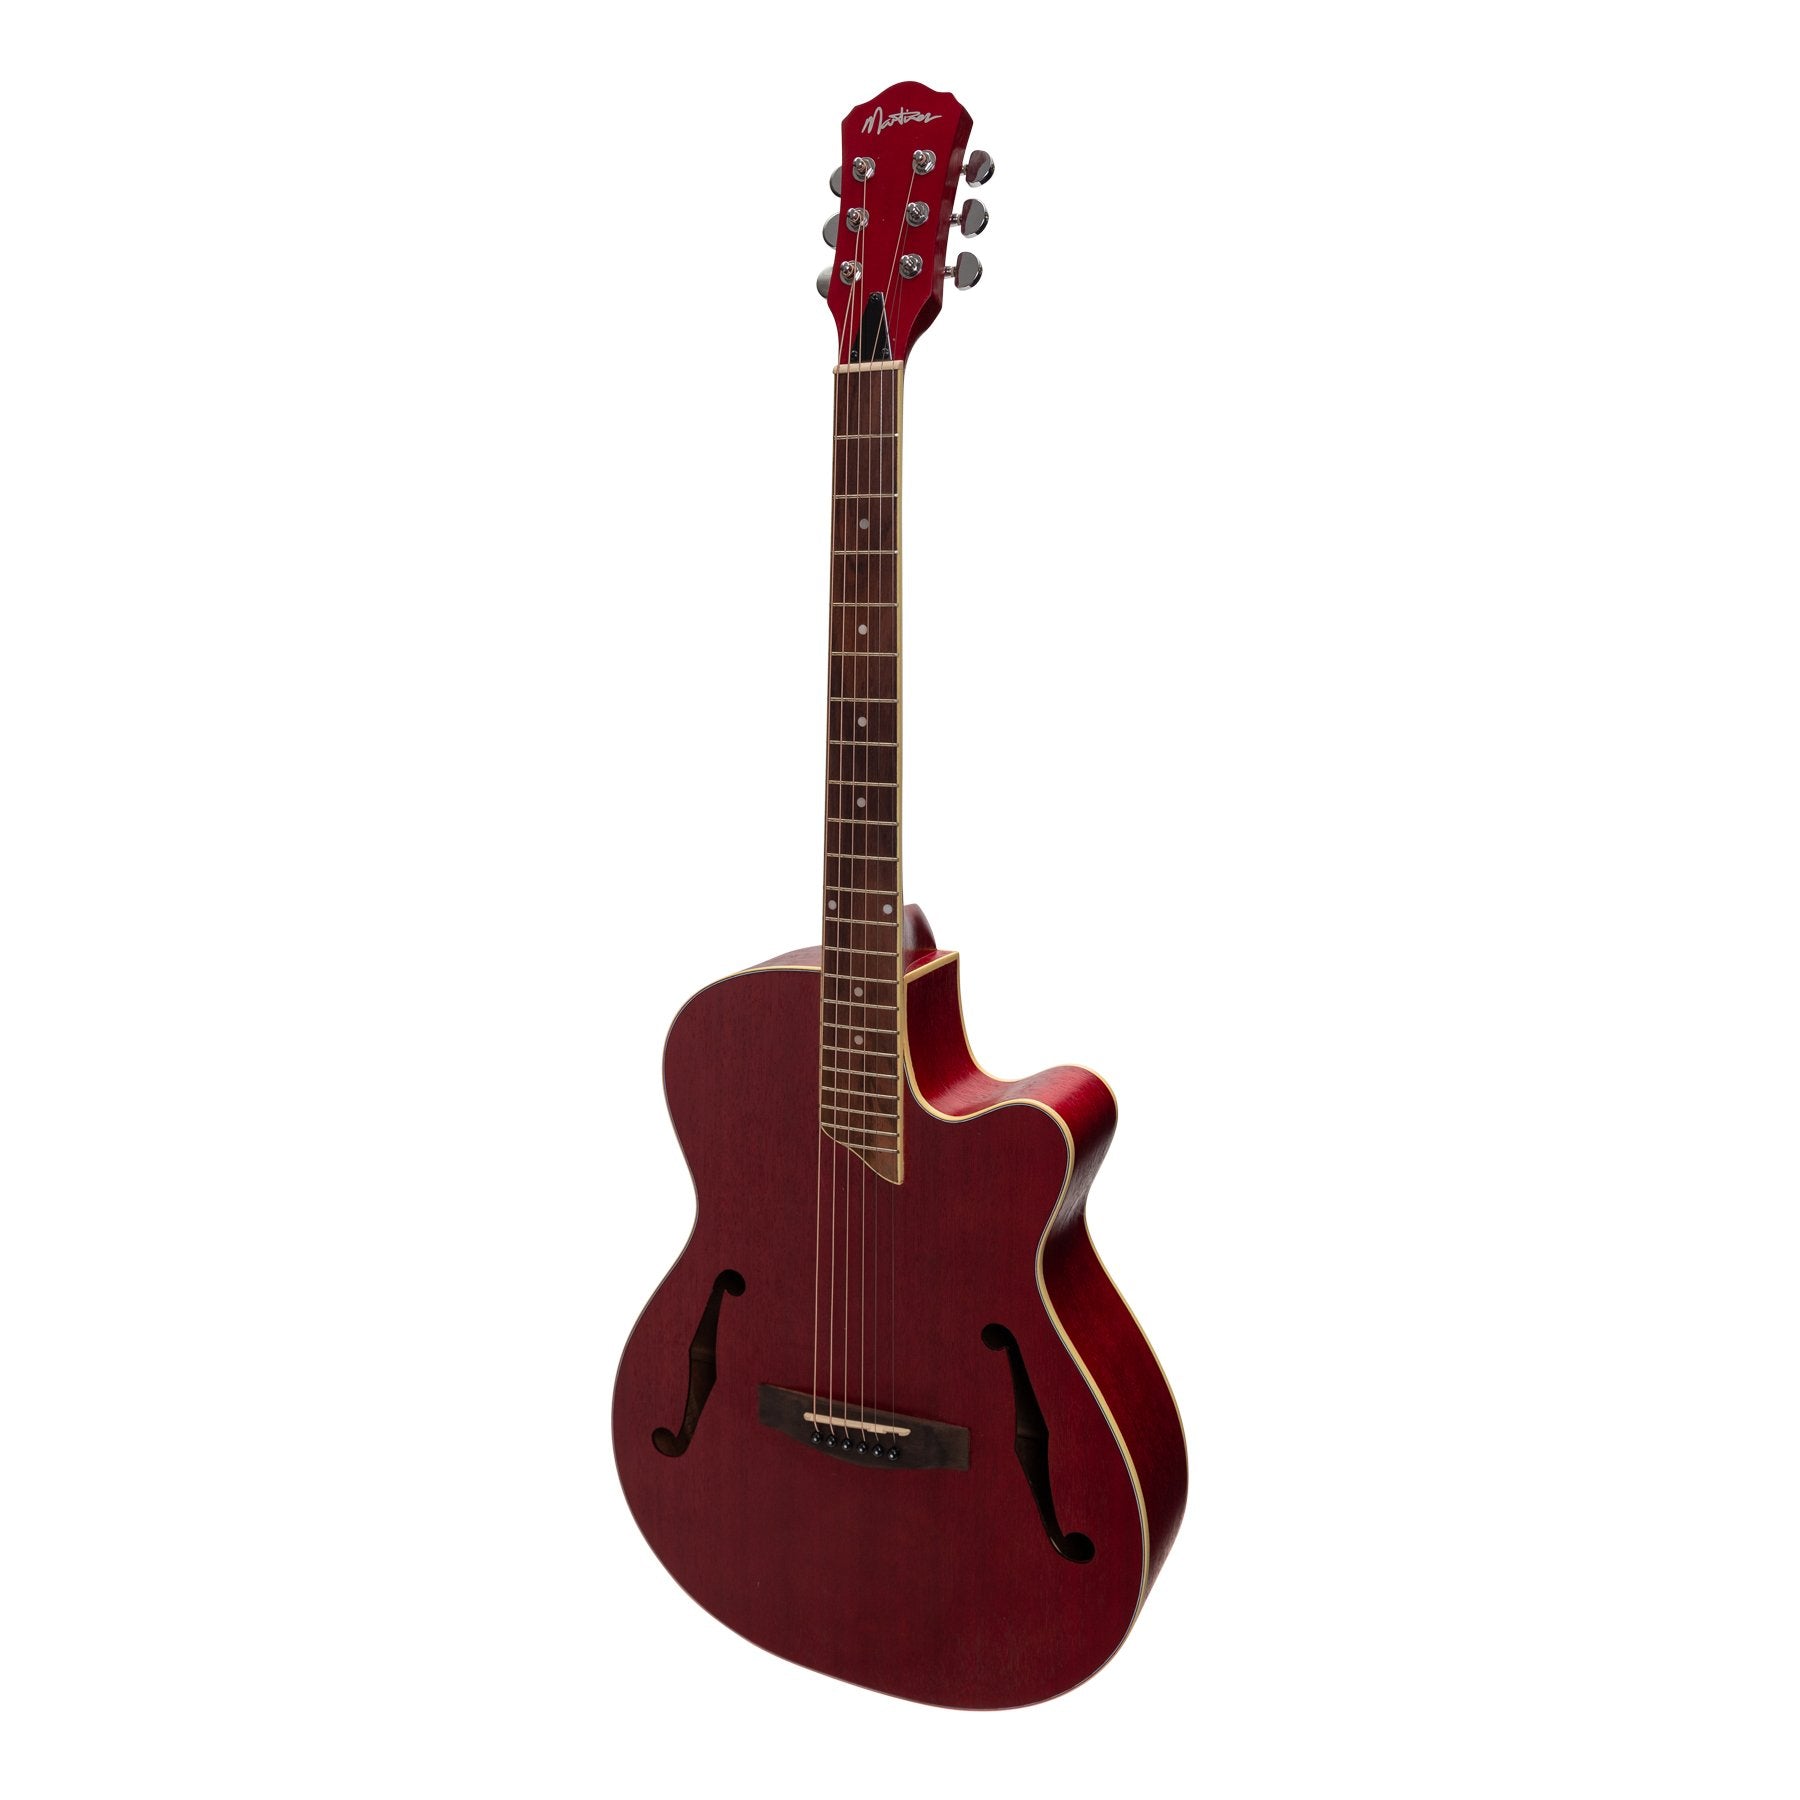 Martinez Jazz Hybrid Acoustic Small Body Cutaway Guitar (Red)-MJH-3C-RED